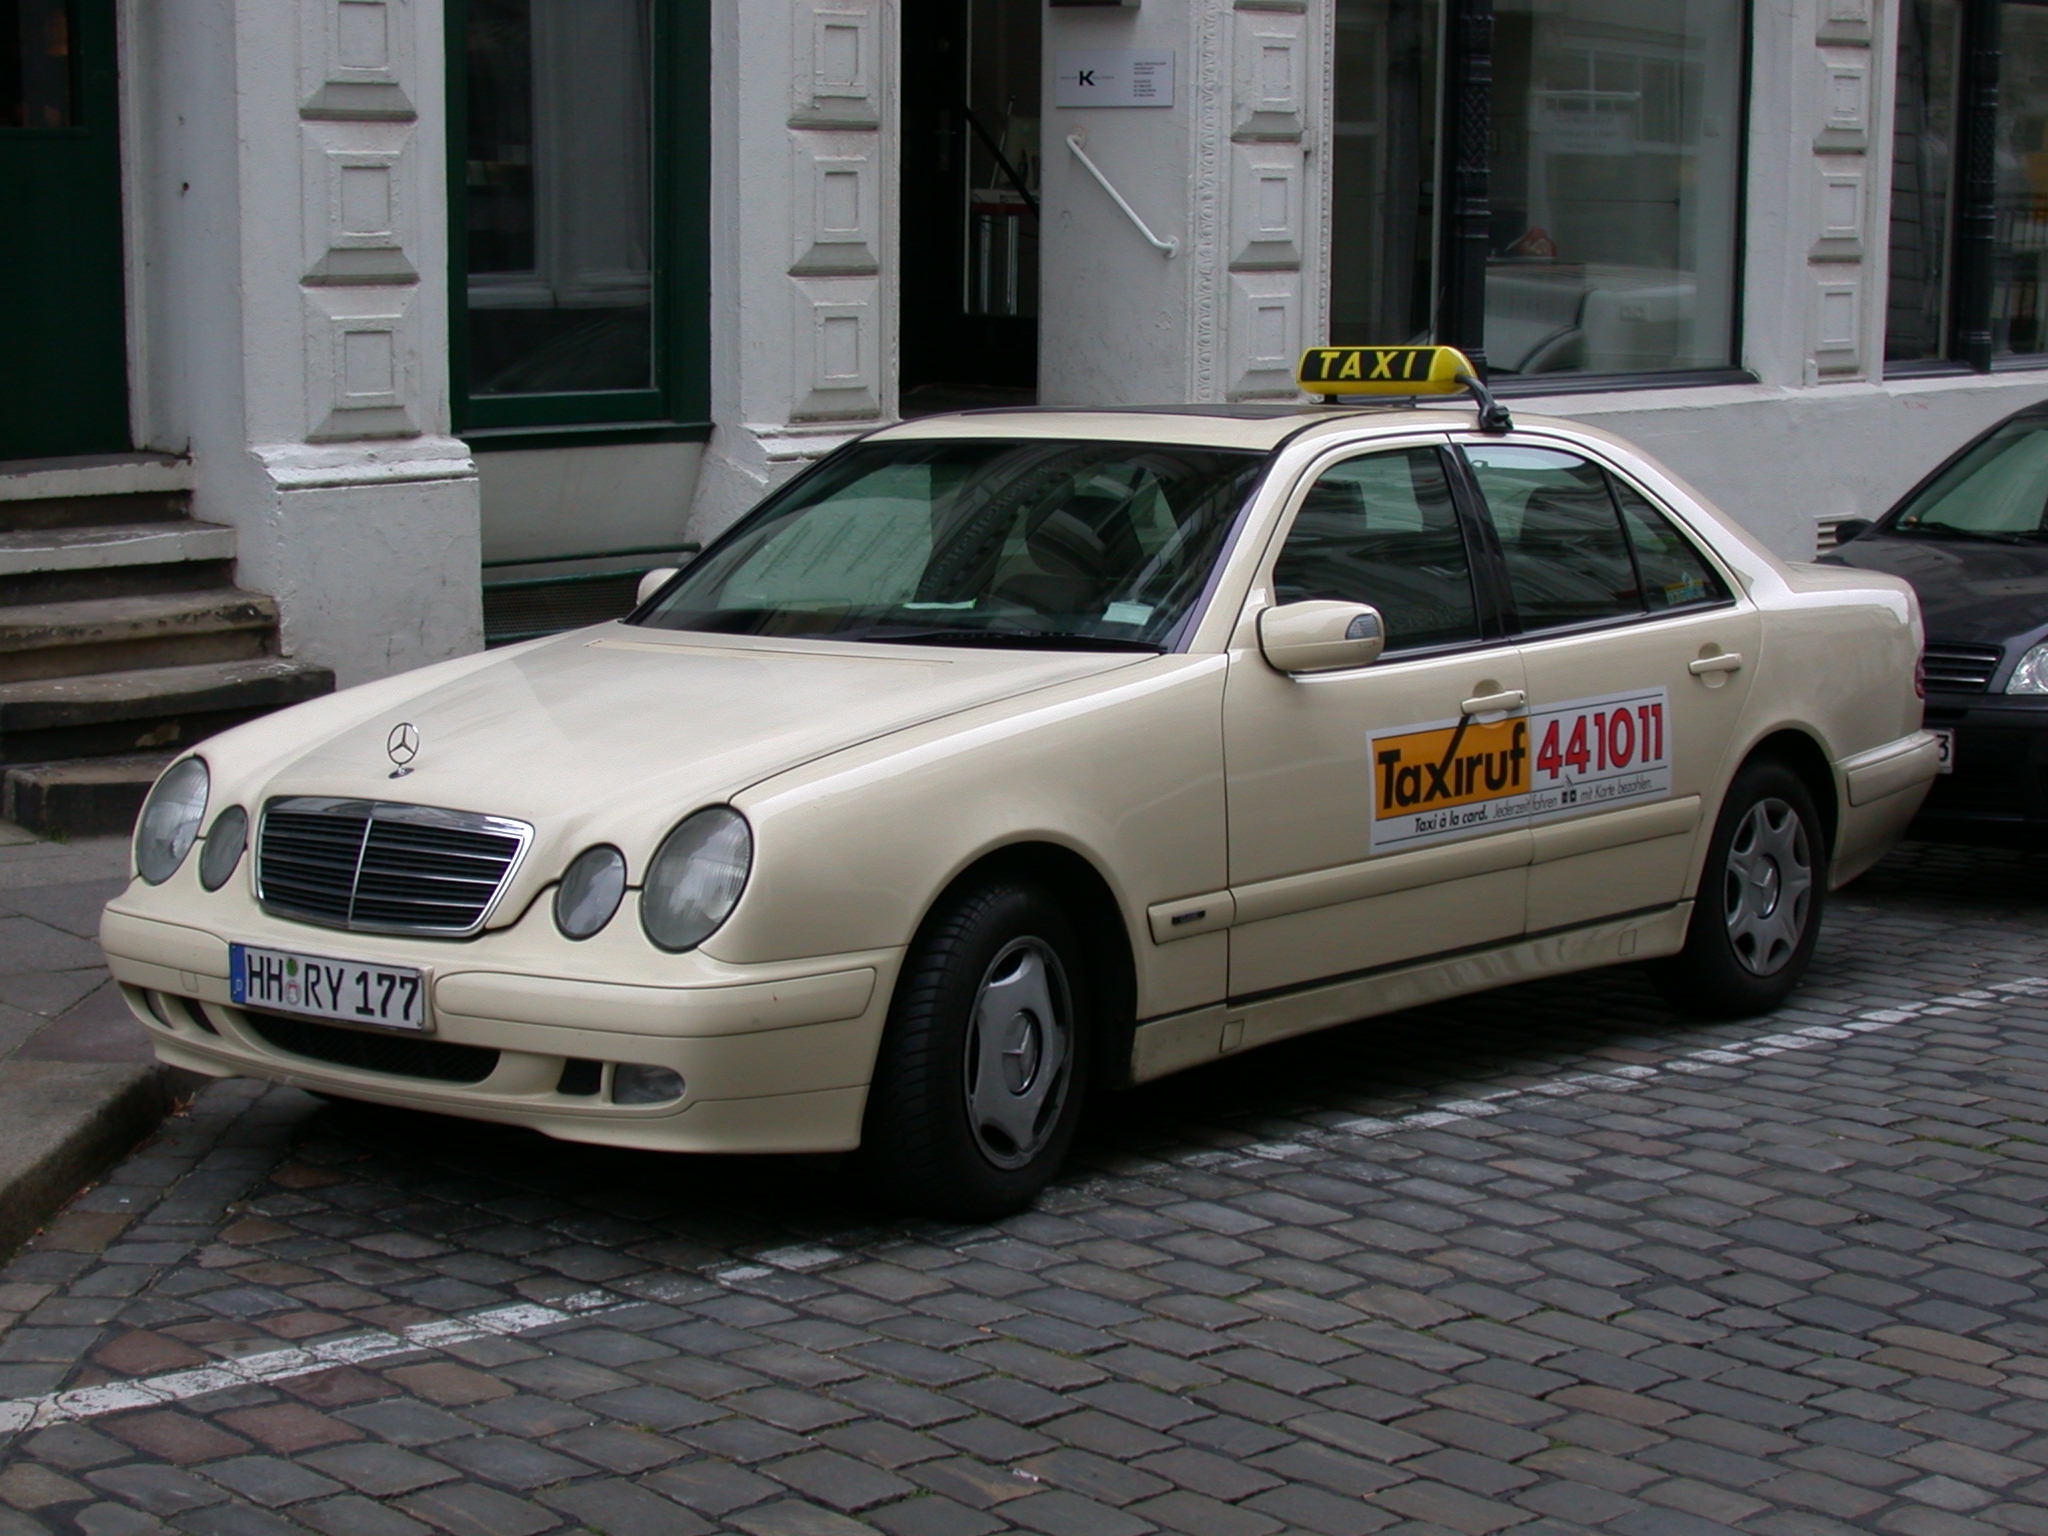 File:Taxi Hamburg Germany.JPG - Wikimedia Commons